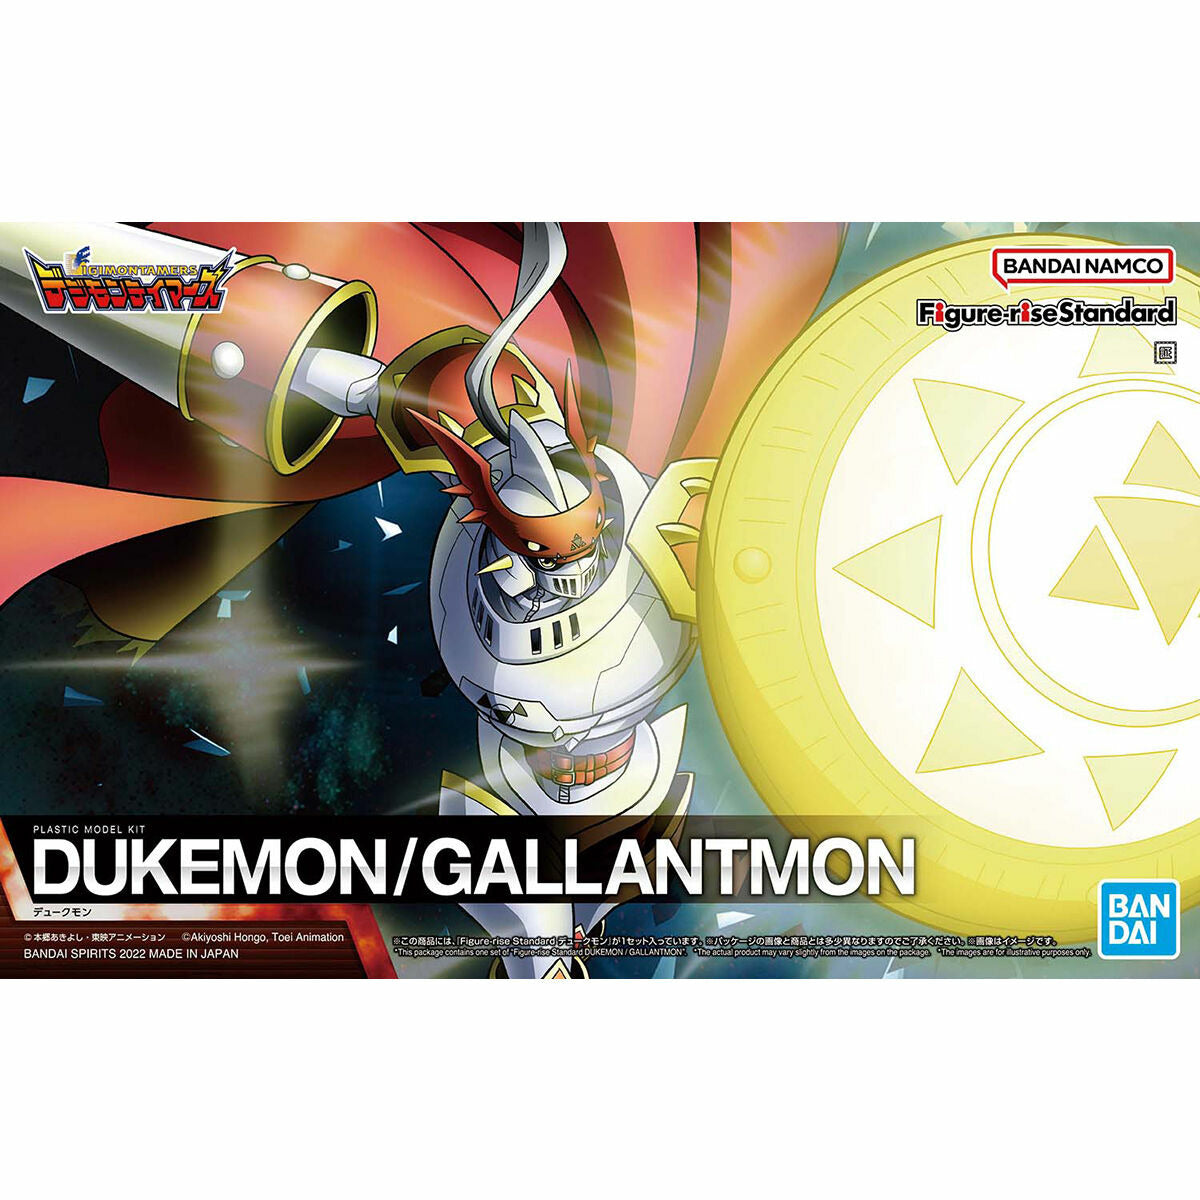 Dukemon/Gallantmon - Figure-rise Standard #5063362 Digimon Action Figure Model Kit by Bandai